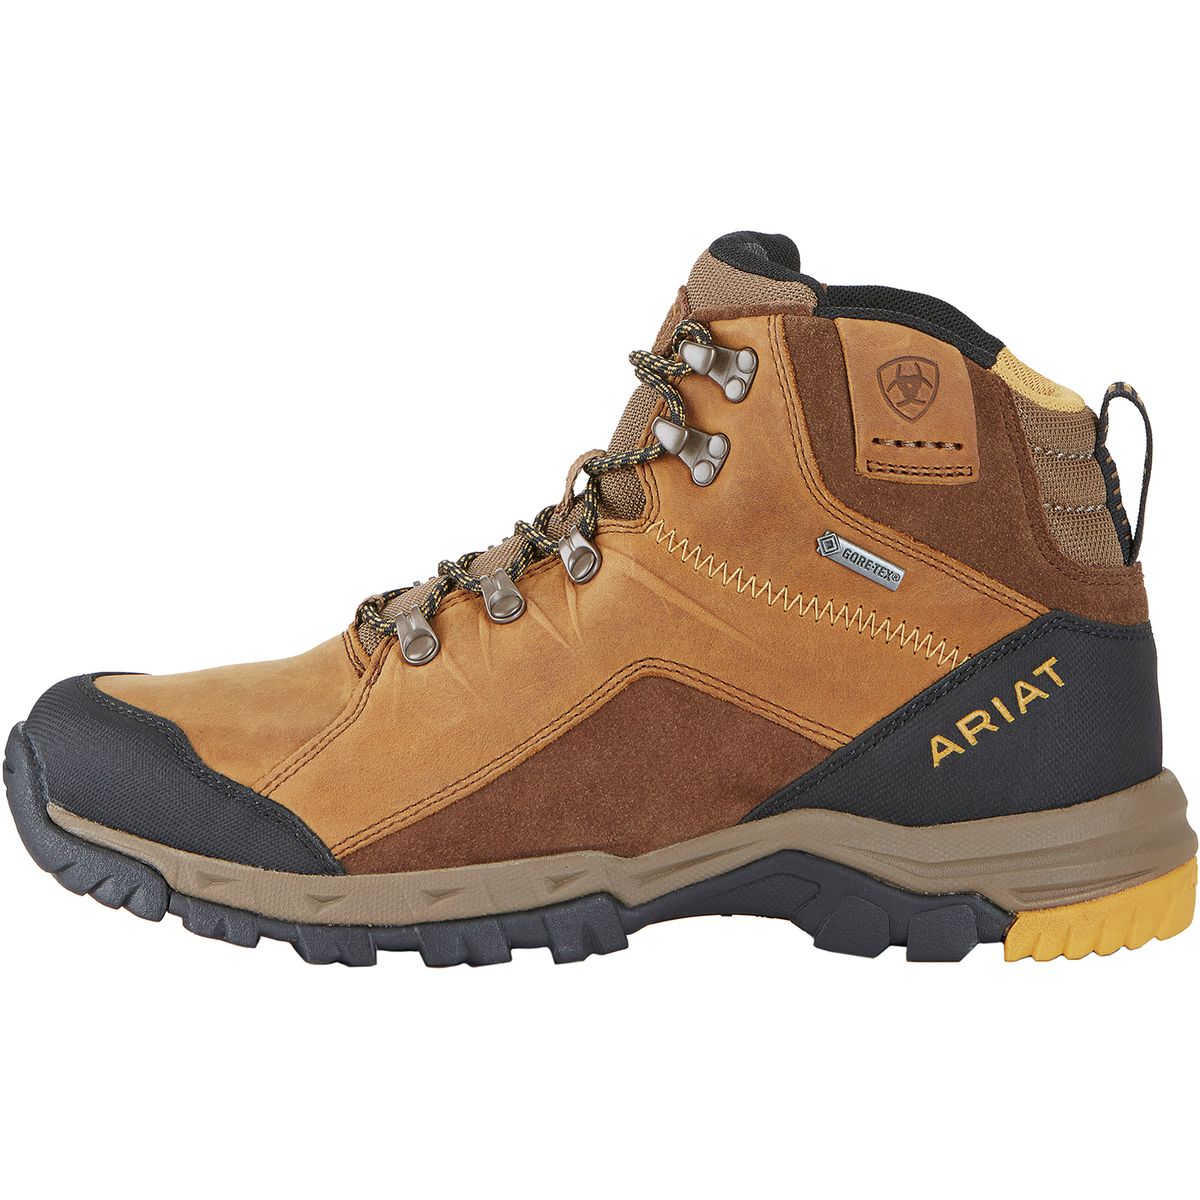 Ariat Skyline Mid GTX Hiking Boot - Men's | eBay